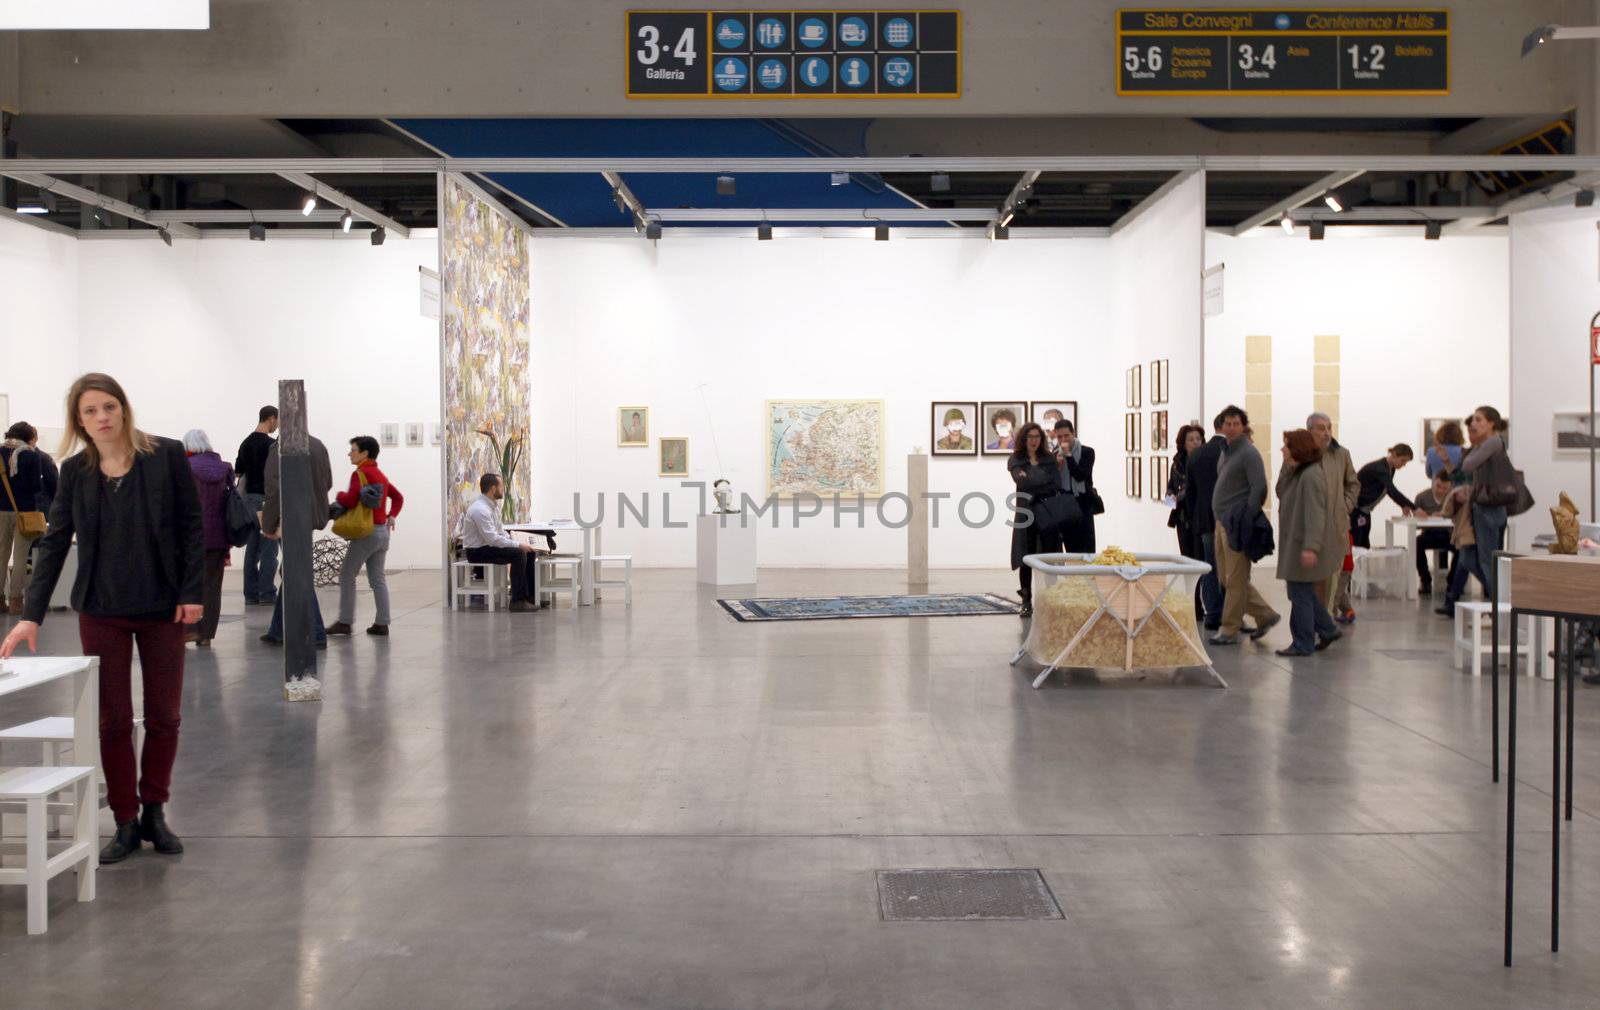 Miart 2013, international exhibition of modern art by adrianocastelli